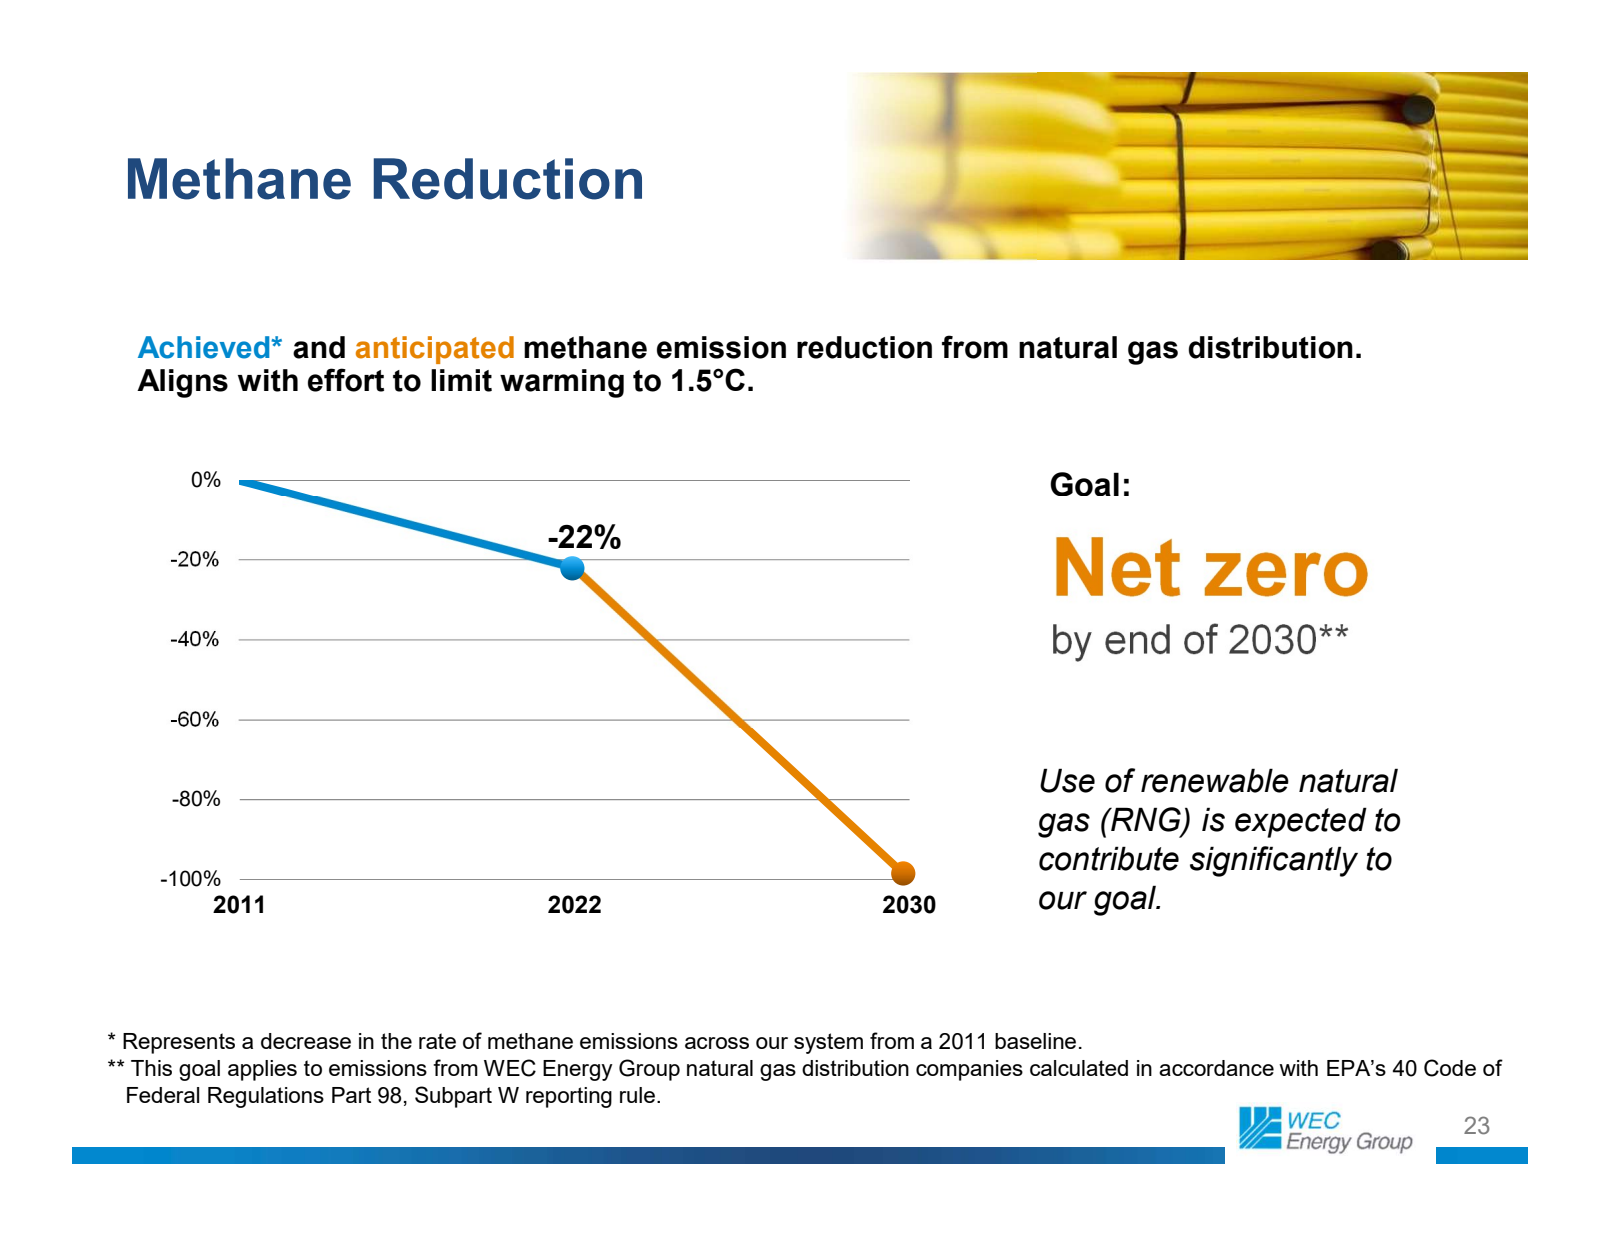 Methane Reduction 

